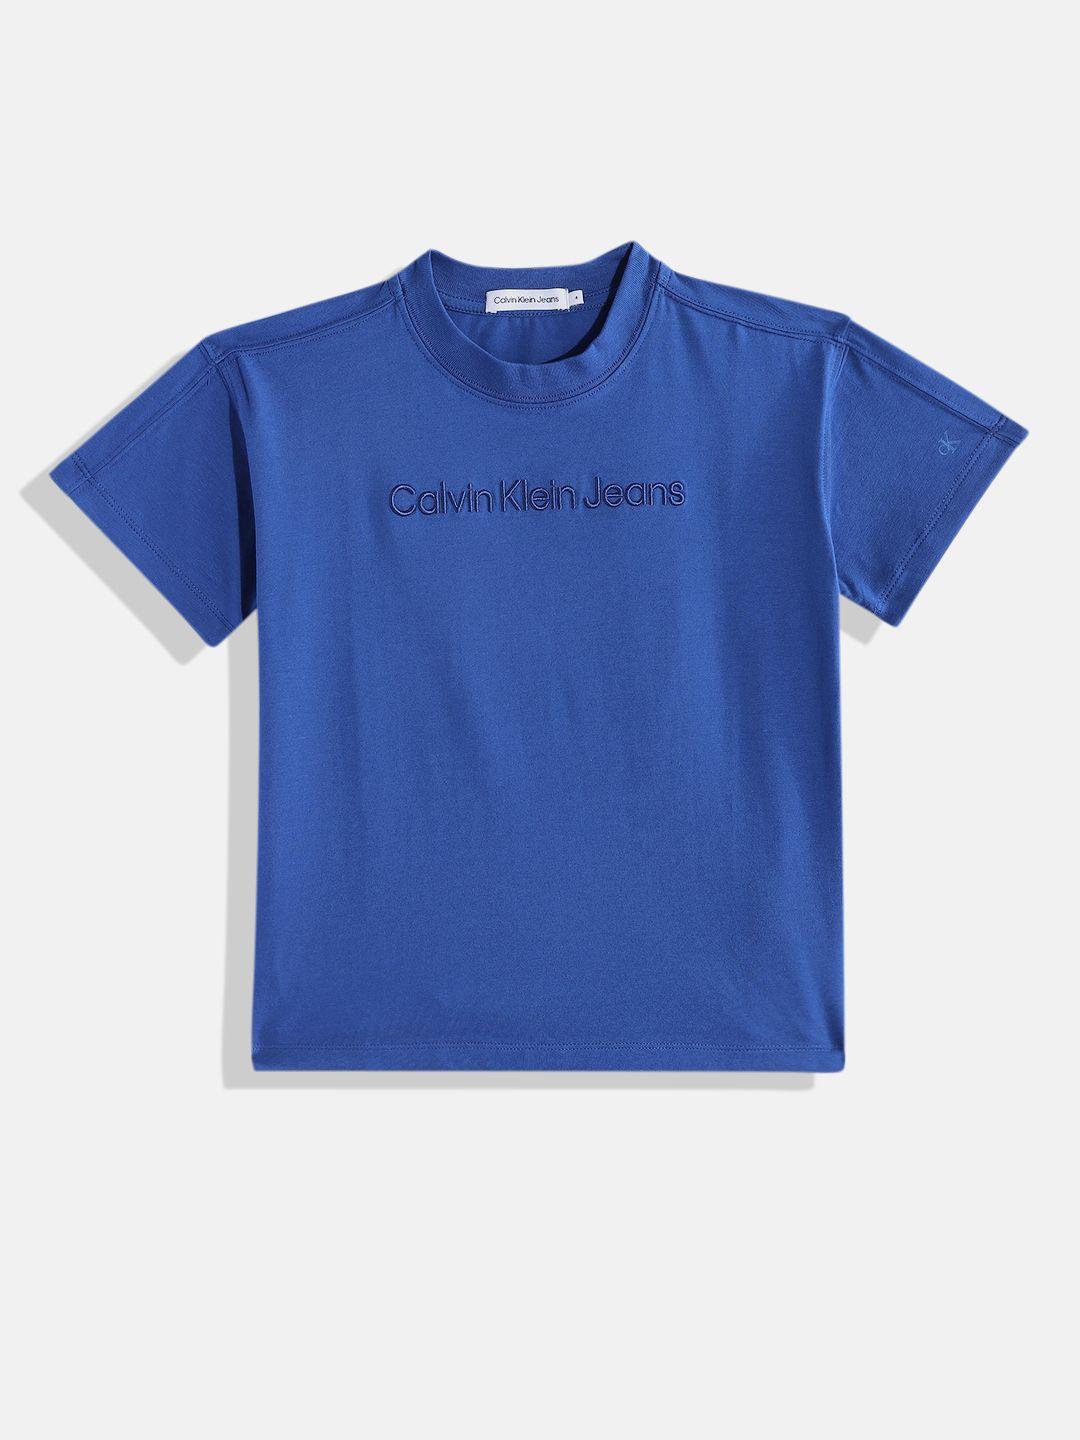 calvin klein boys brand logo embroidered t-shirt